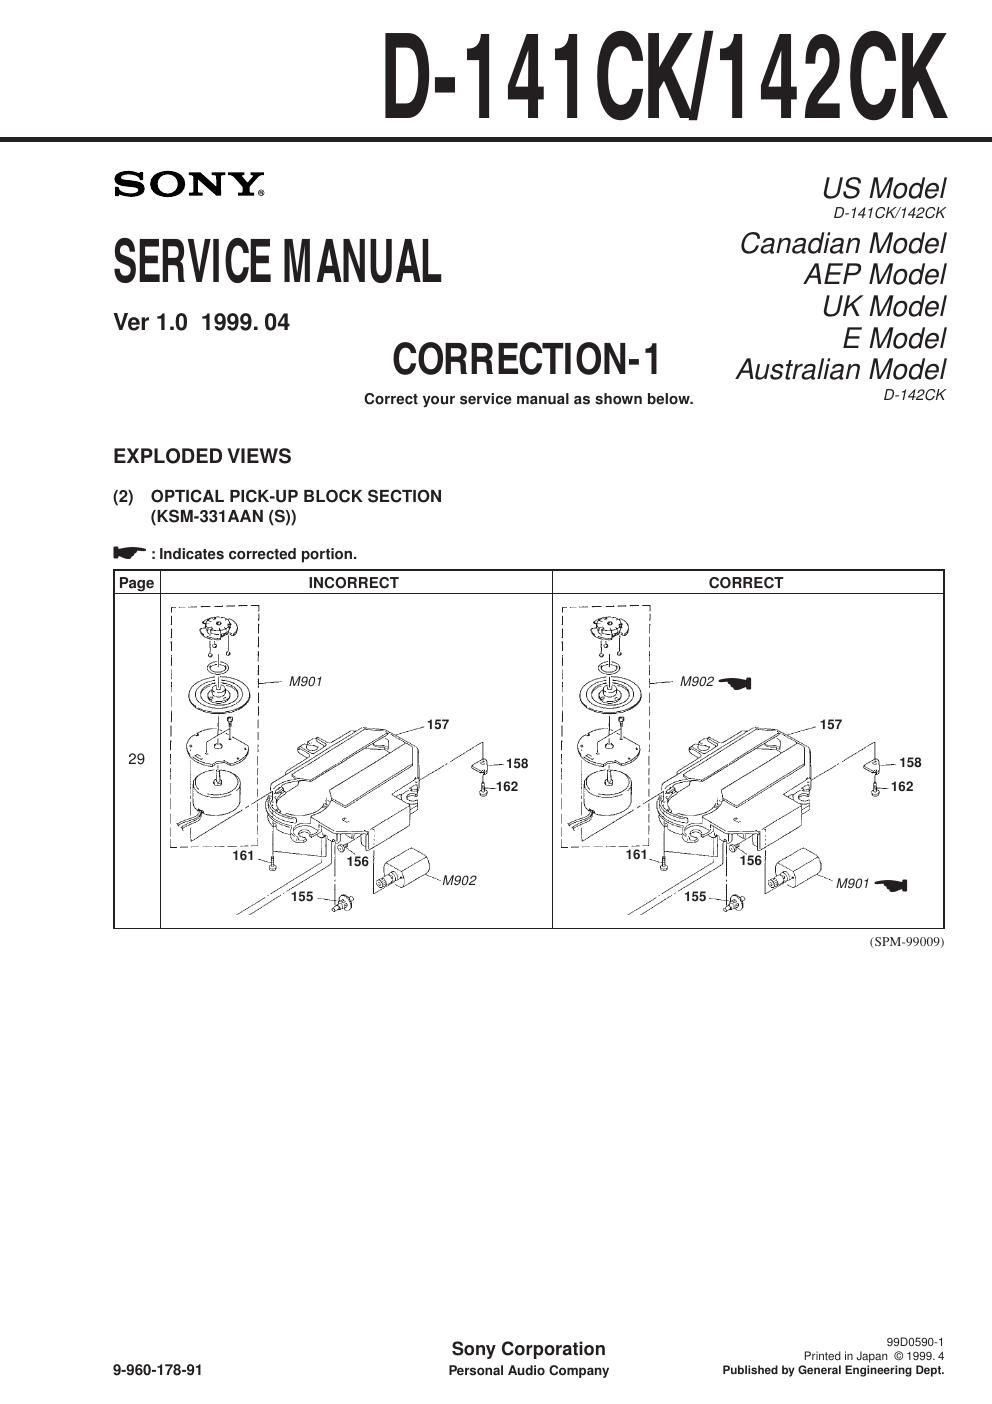 sony d 142 ck service manual